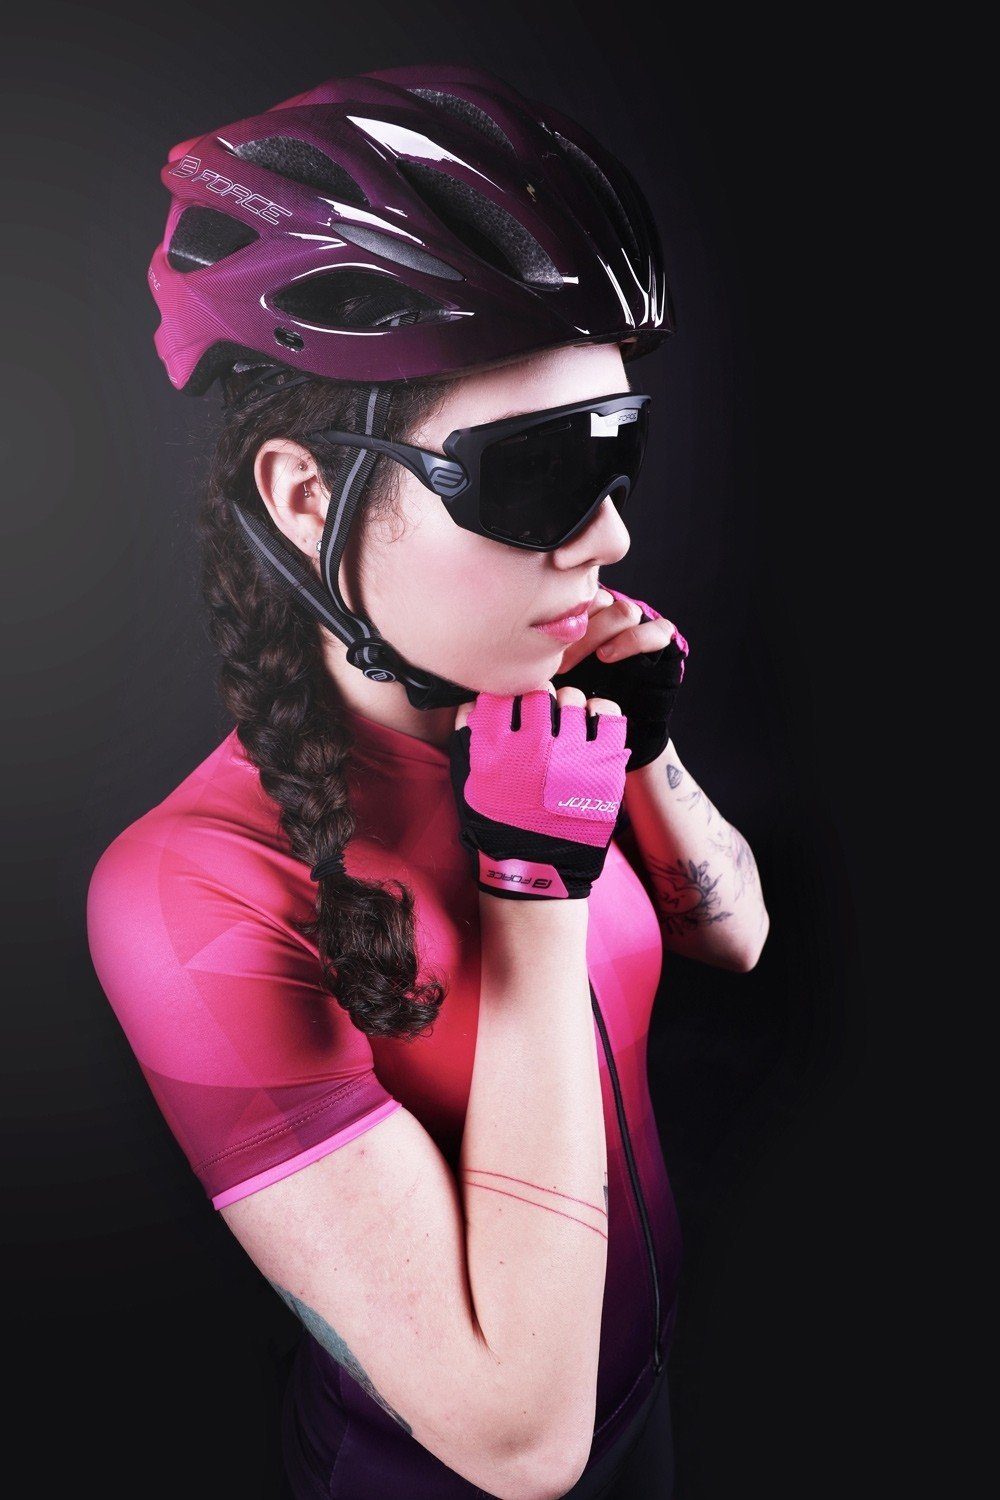 LADY SECTOR Fahrradhandschuhe FORCE Handschuhe pink-schwarz FORCE